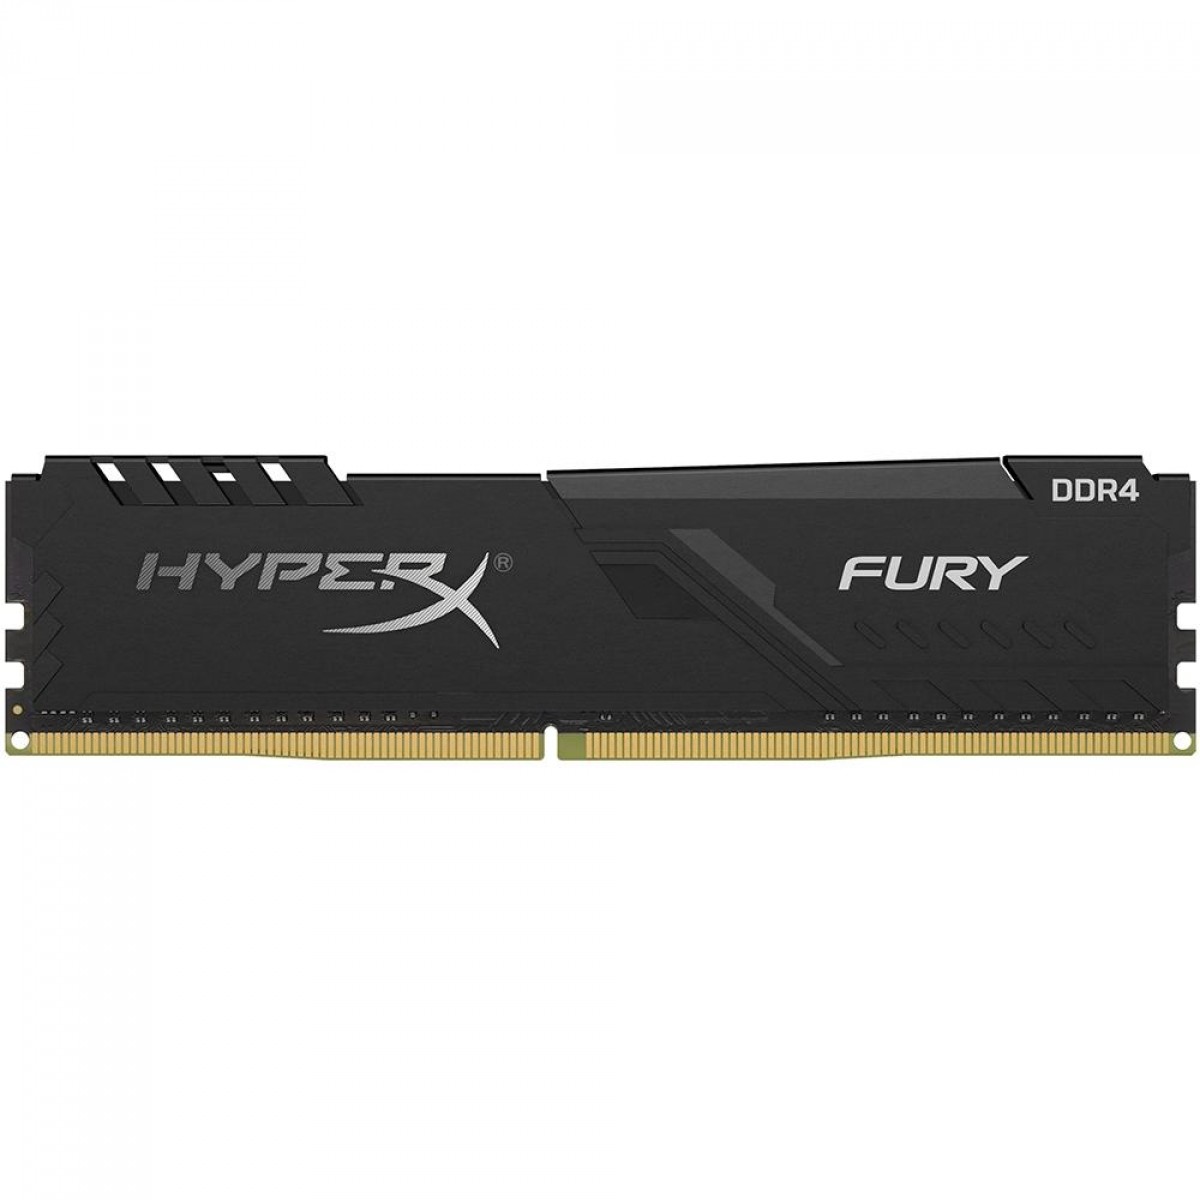 Memória DDR4 HyperX Fury, 16GB (2x8GB), 2400MHz, Black, HX424C15FB3K2/16